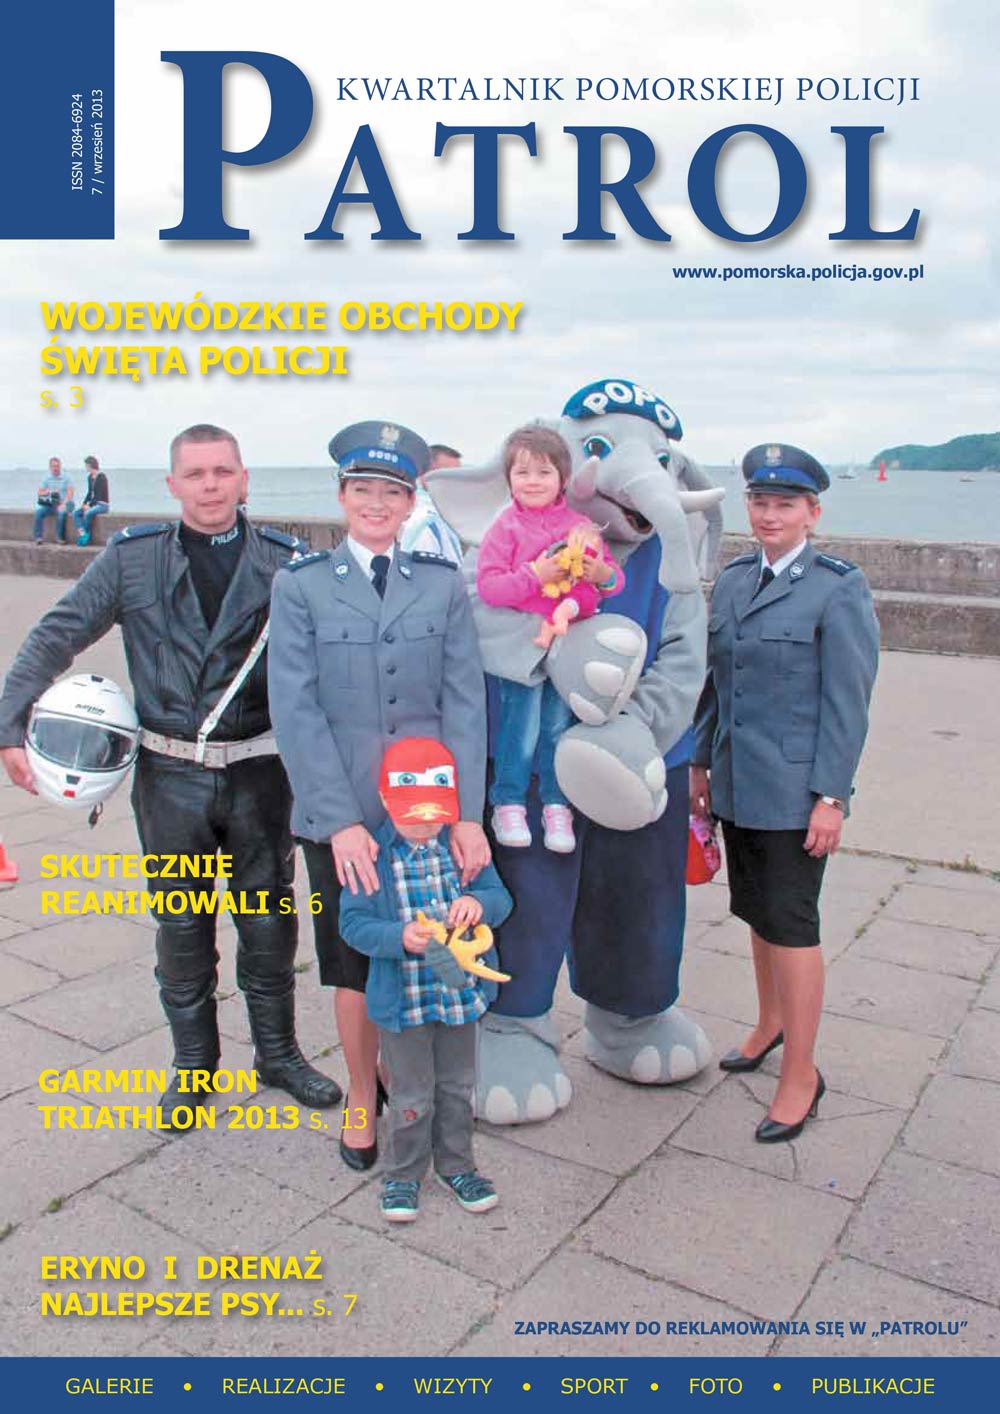 [2013, 03] PATROL. KWARTALNIK POMORSKIEJ POLICJI. - 2013, [nr] 7 / wrzesień, www.pomorska.policja.gov.pl